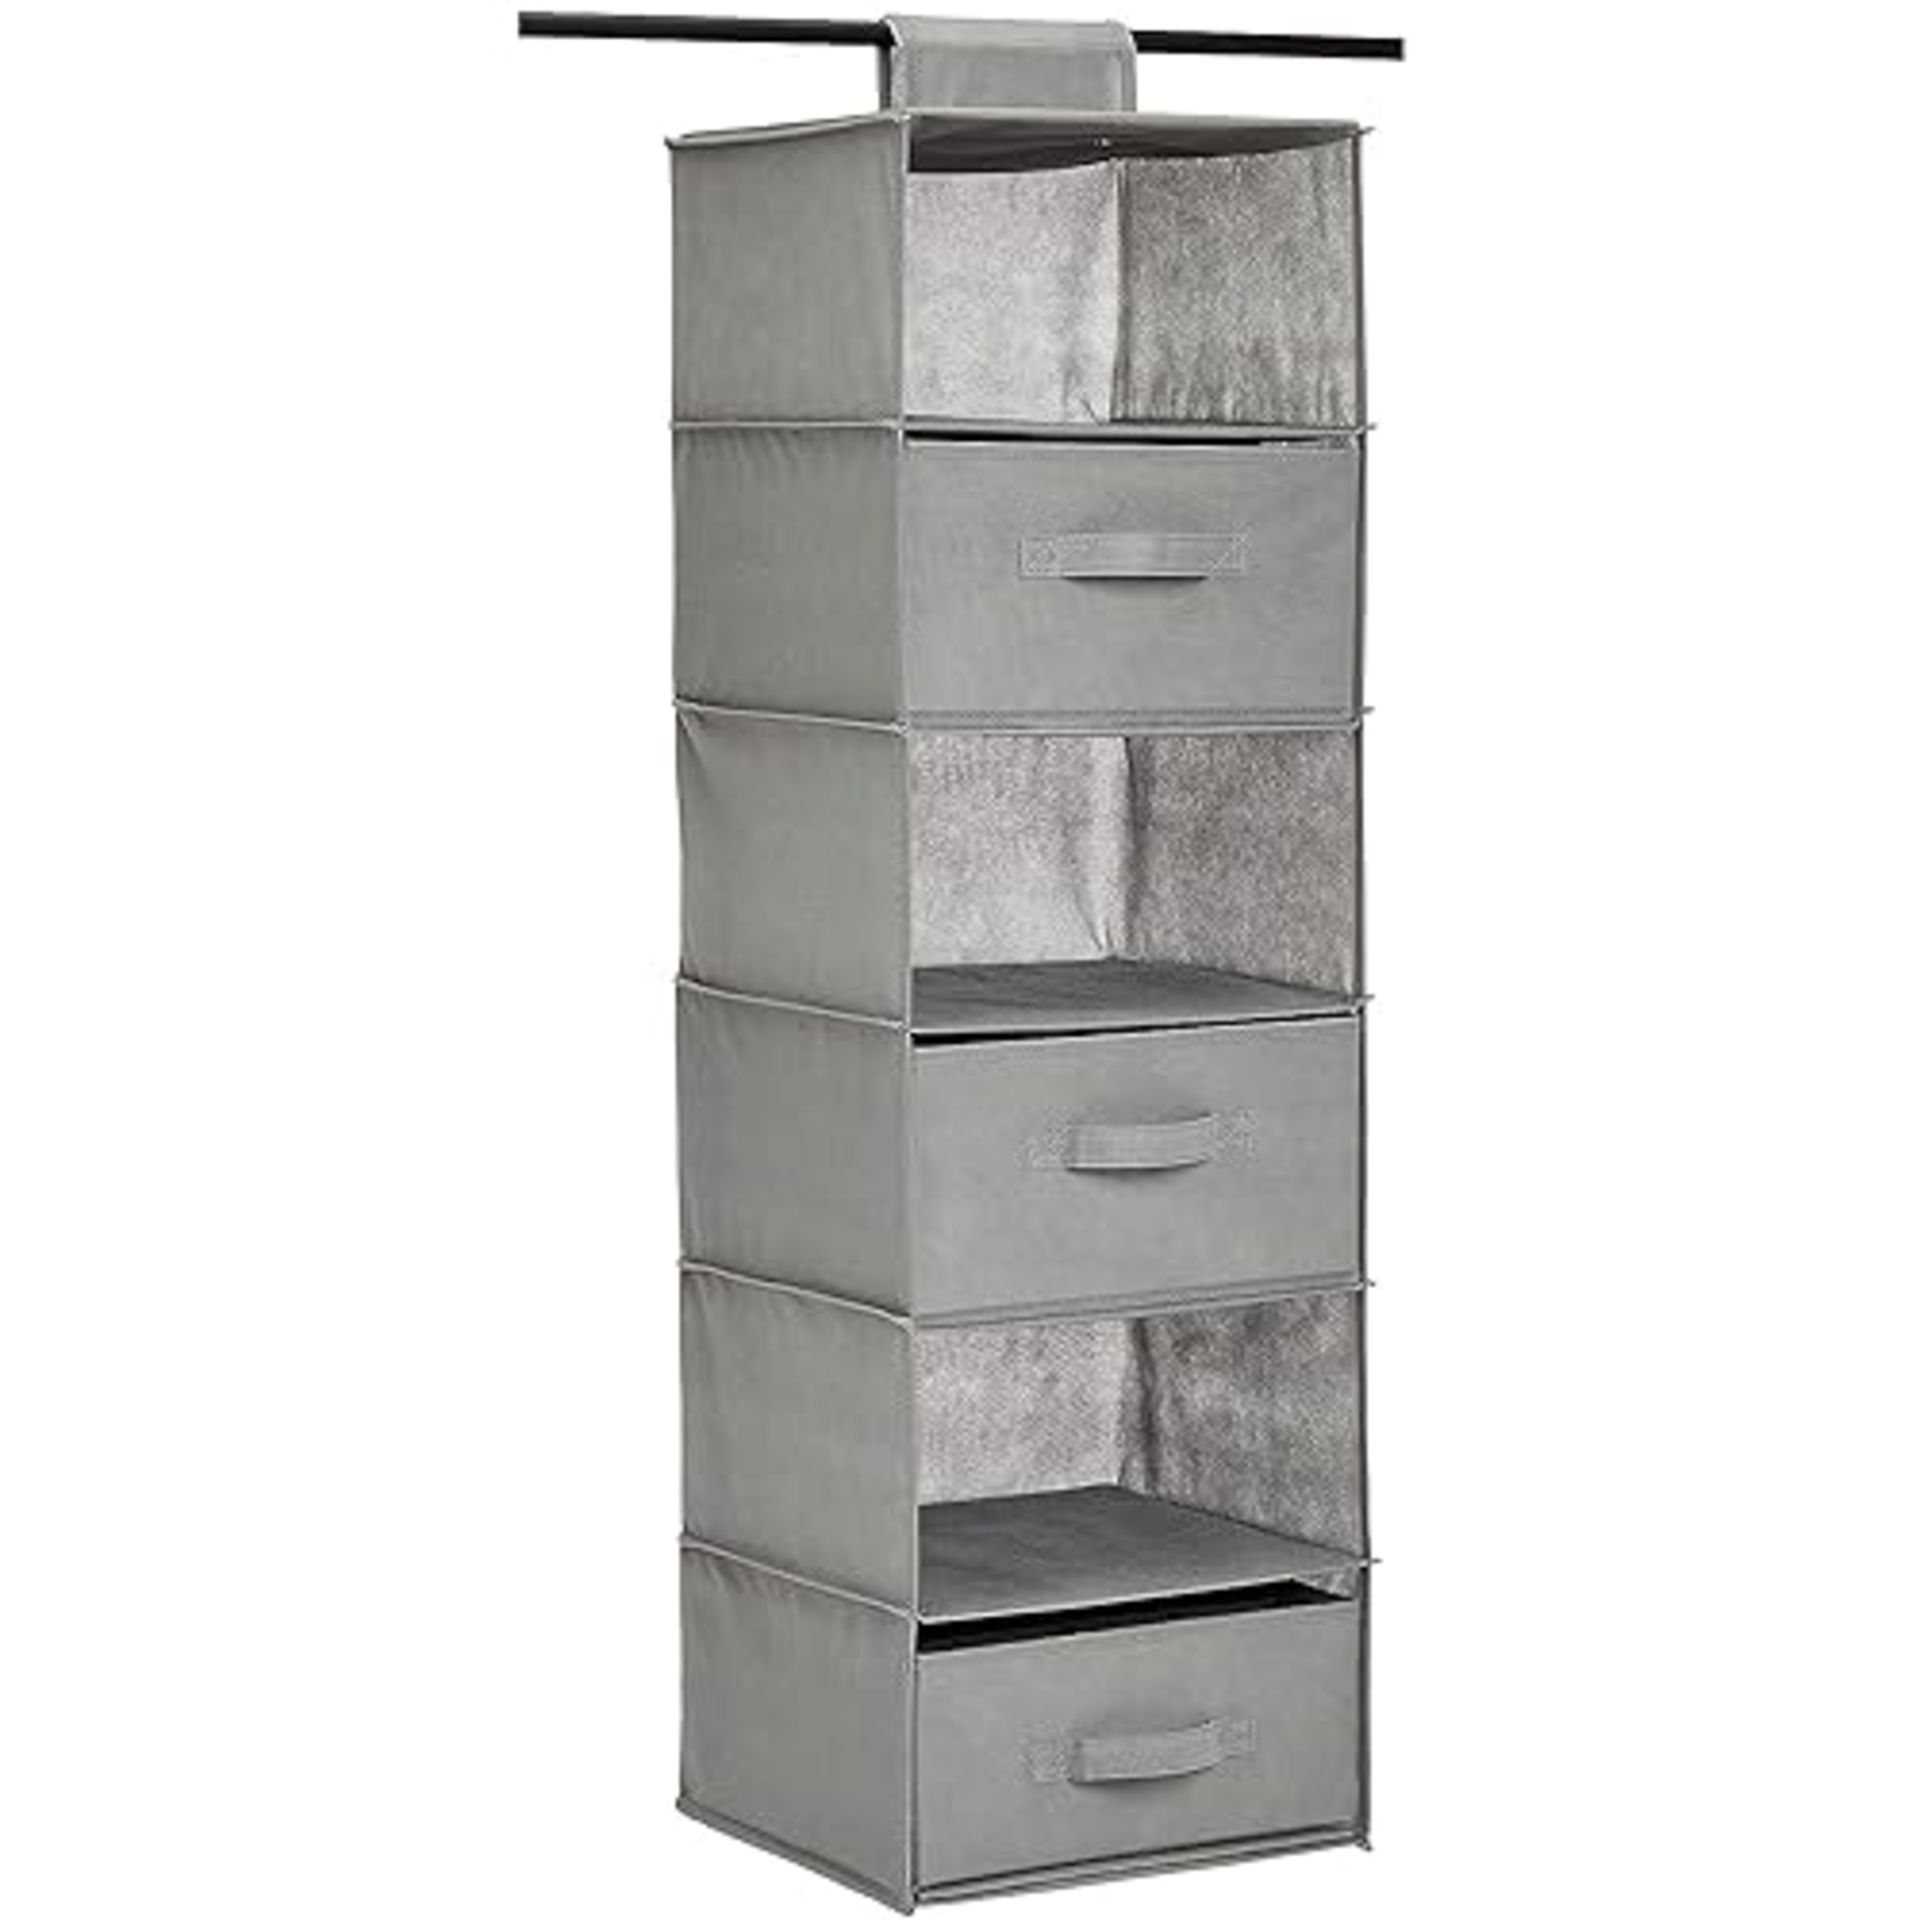 Amazon Basics Hanging Closet Shelf With 3 Removable Drawers, 6-Tier, Gray, 17.5D x 34.5W x 31H cm